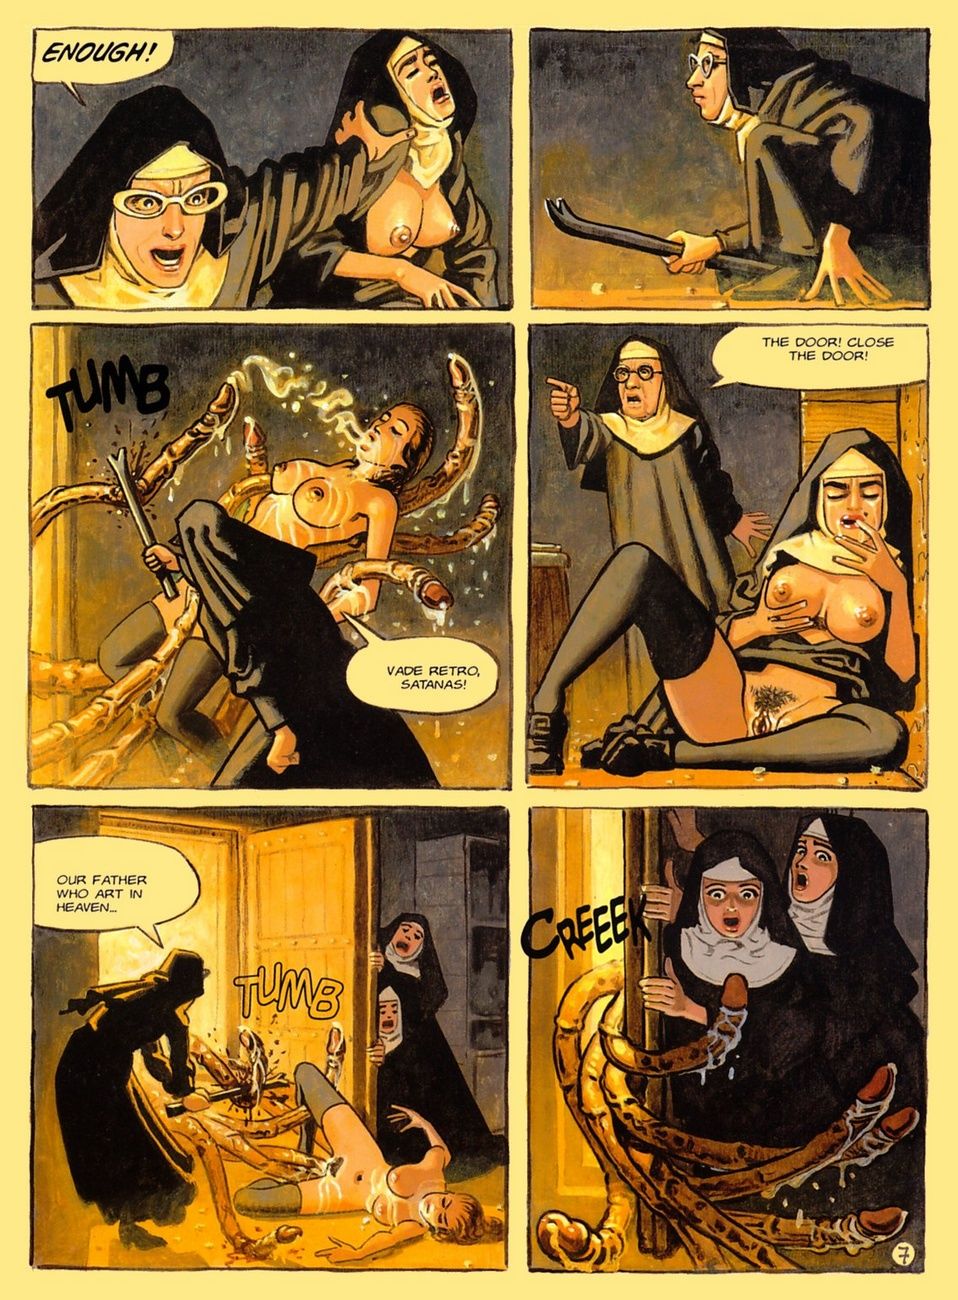 die Kloster der die Hölle Teil 2 page 1